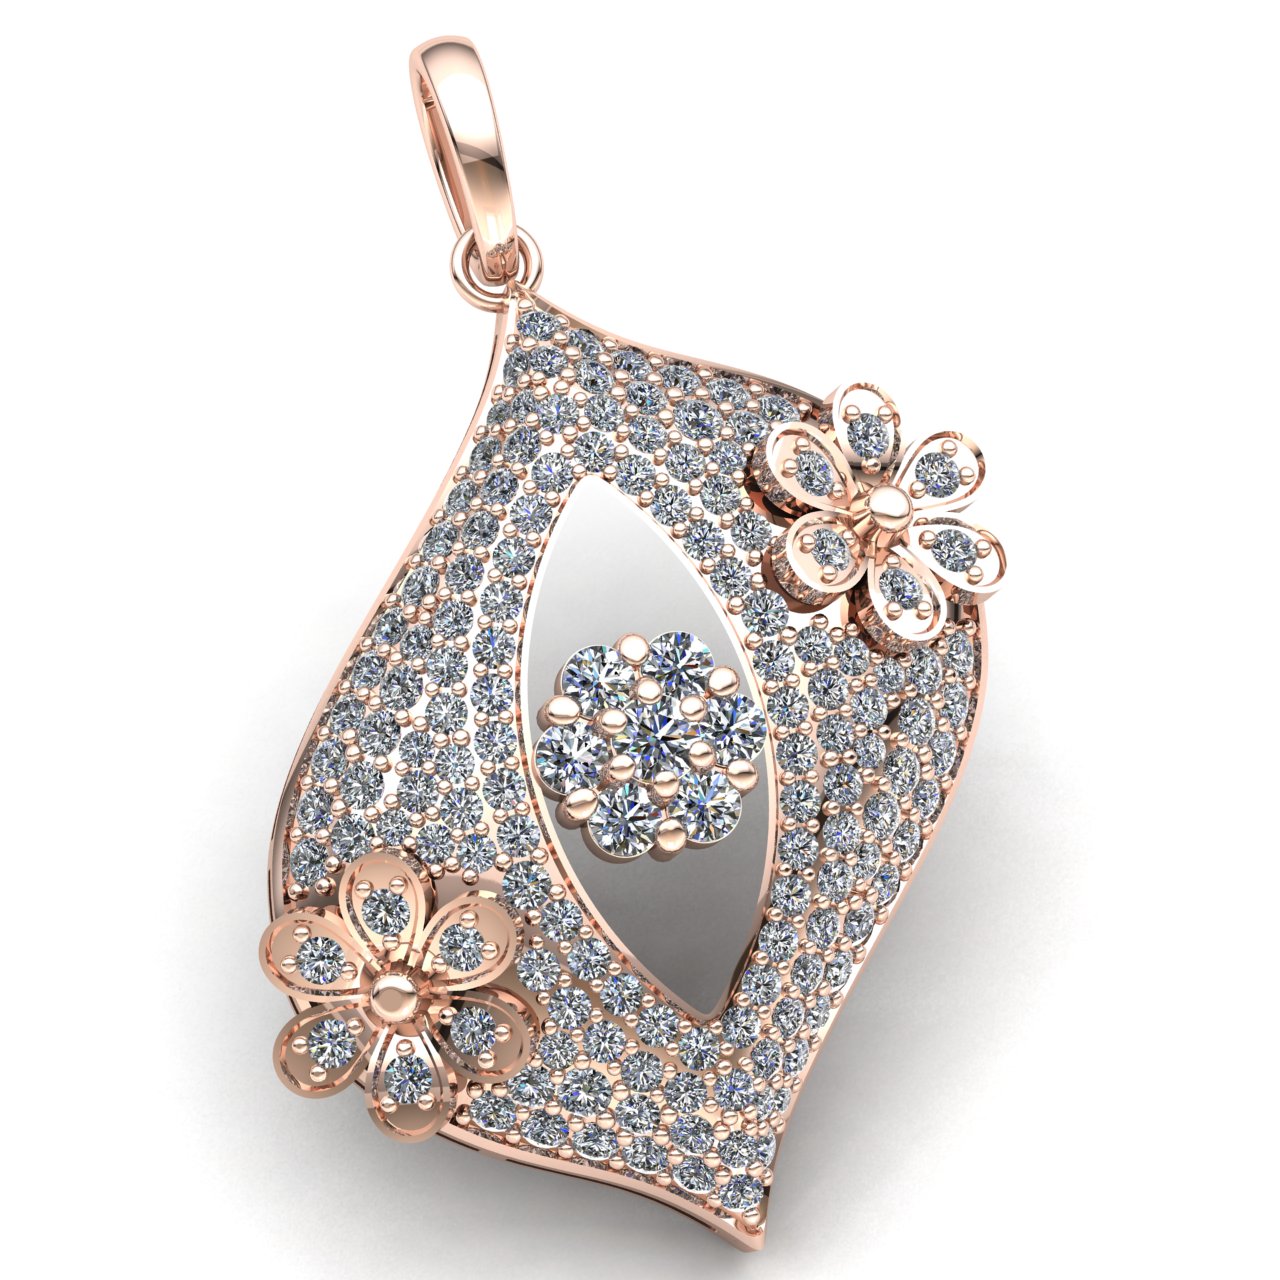 Jewel We Sell 4carat Round Cut Diamond Ladies Cluster Fancy Flower Pendant Solid 14K Rose Gold FG VS